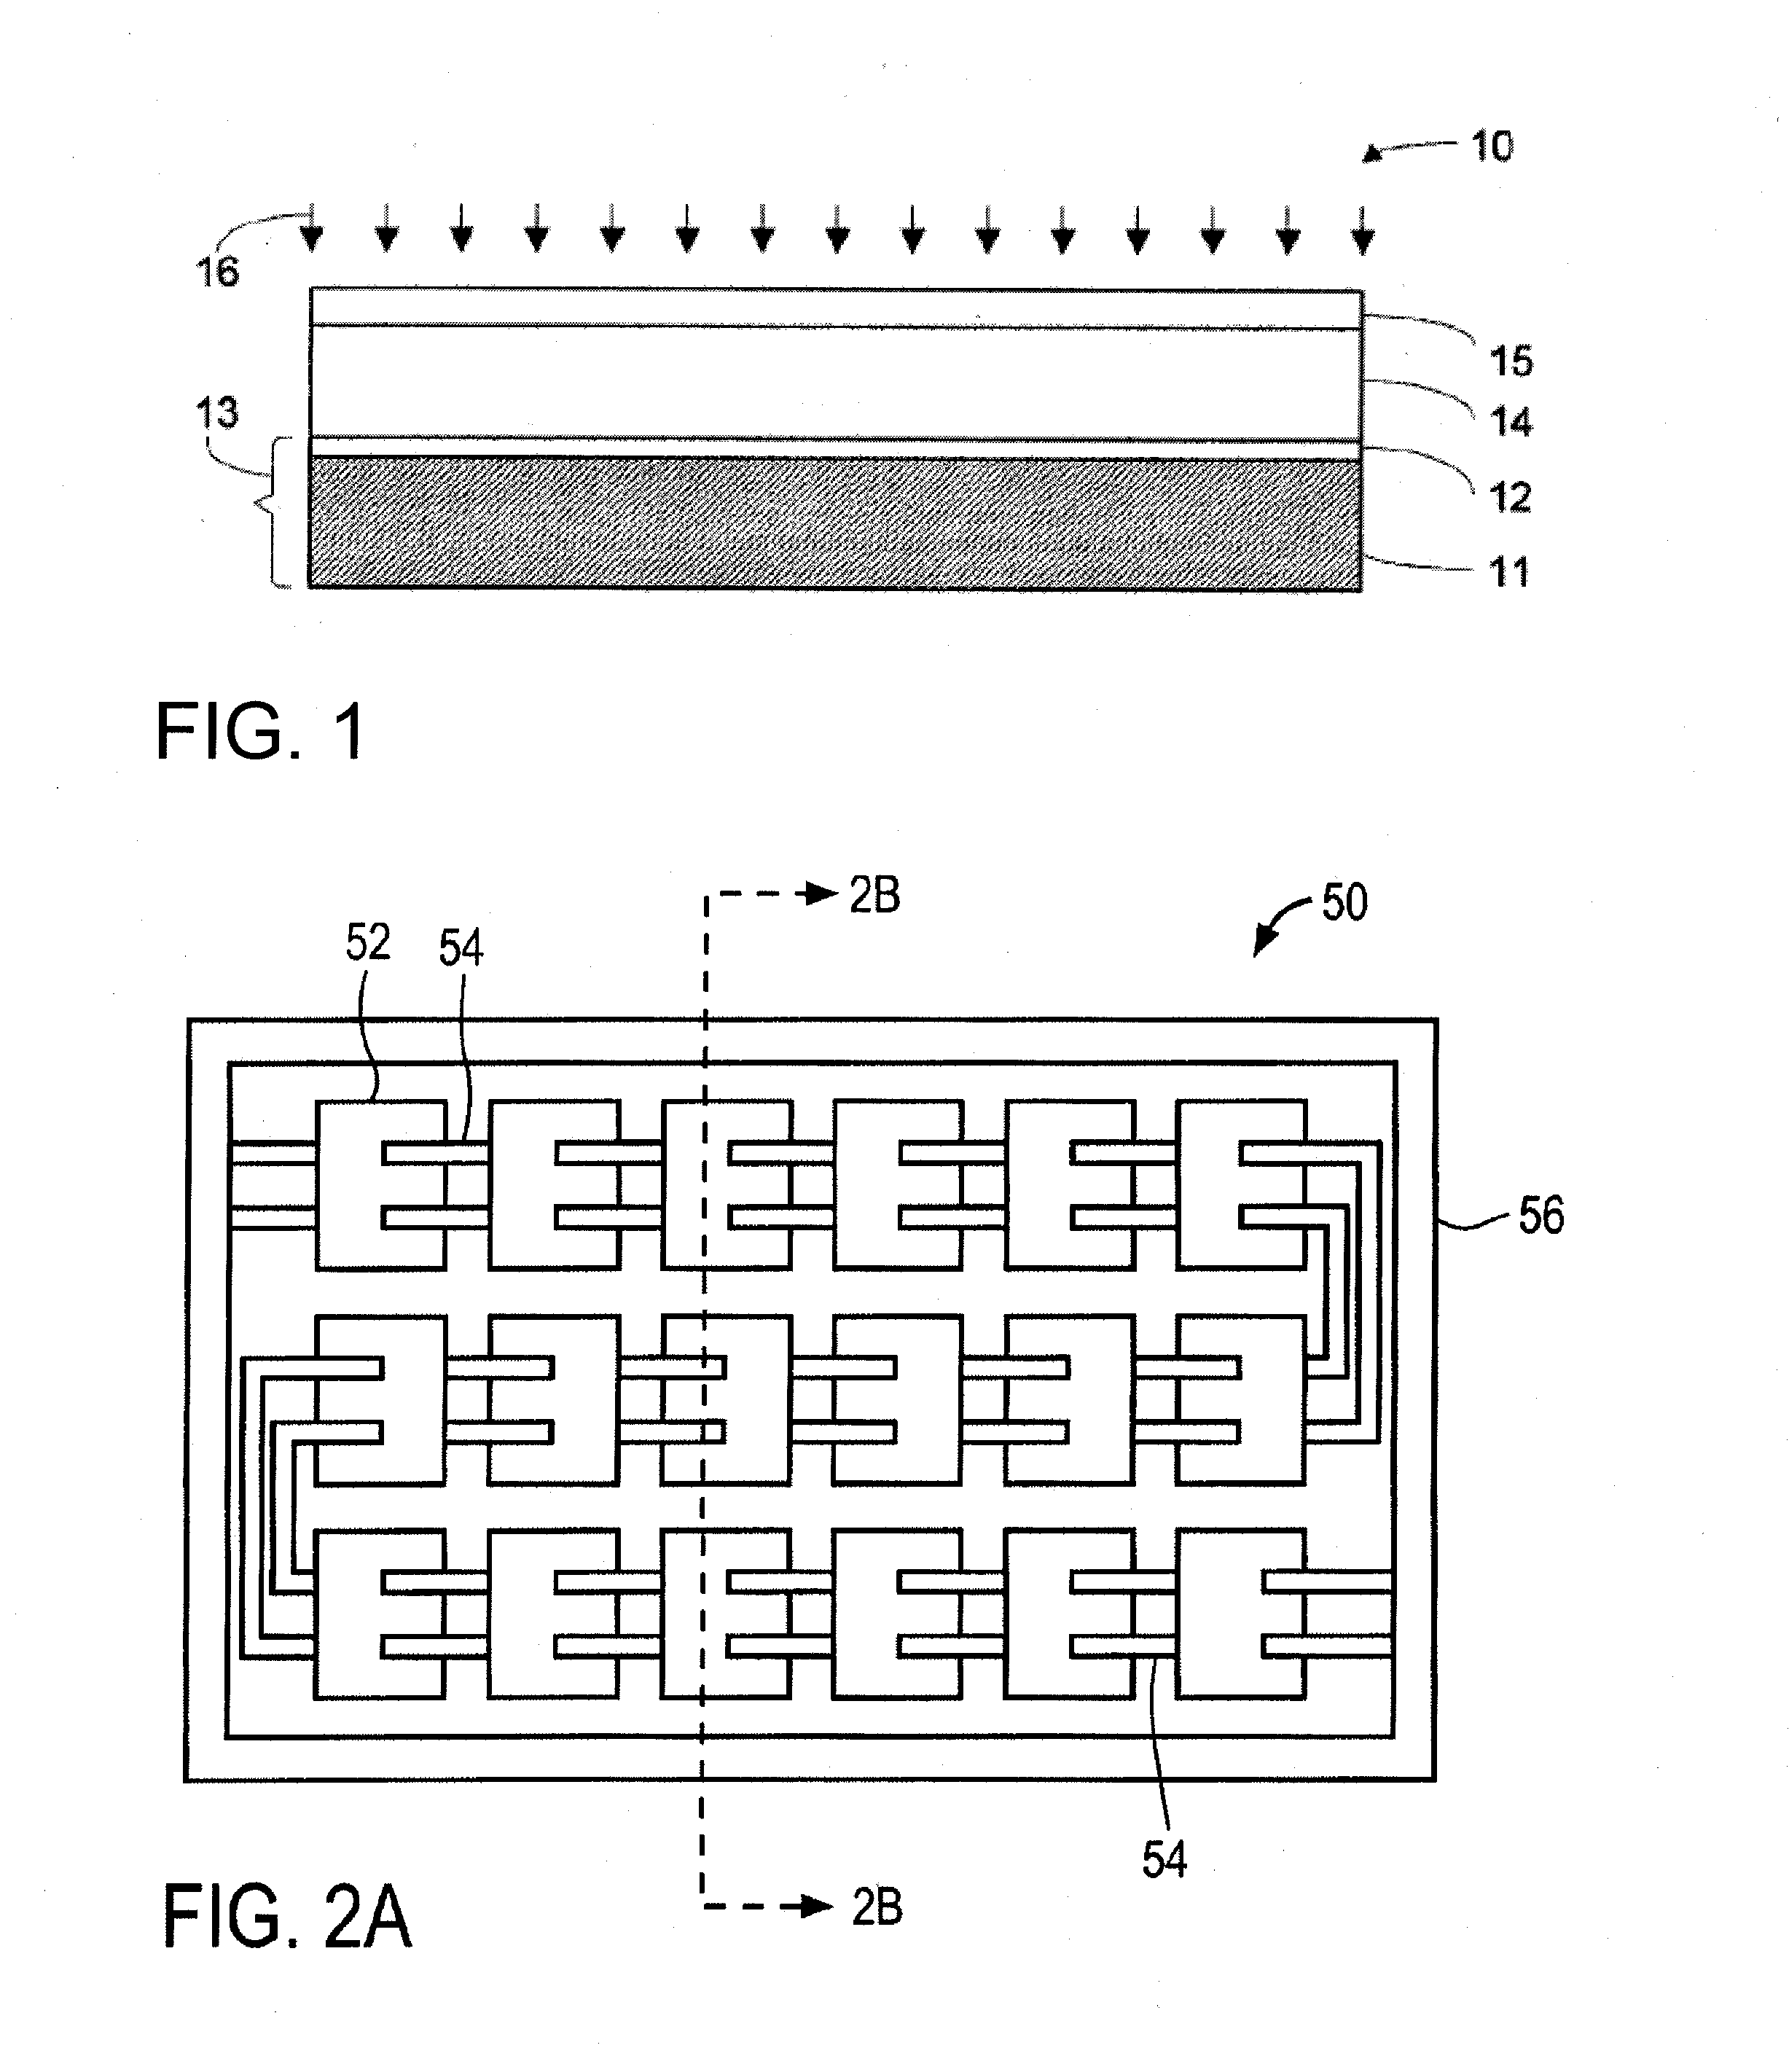 Methods of interconnecting thin film solar cells